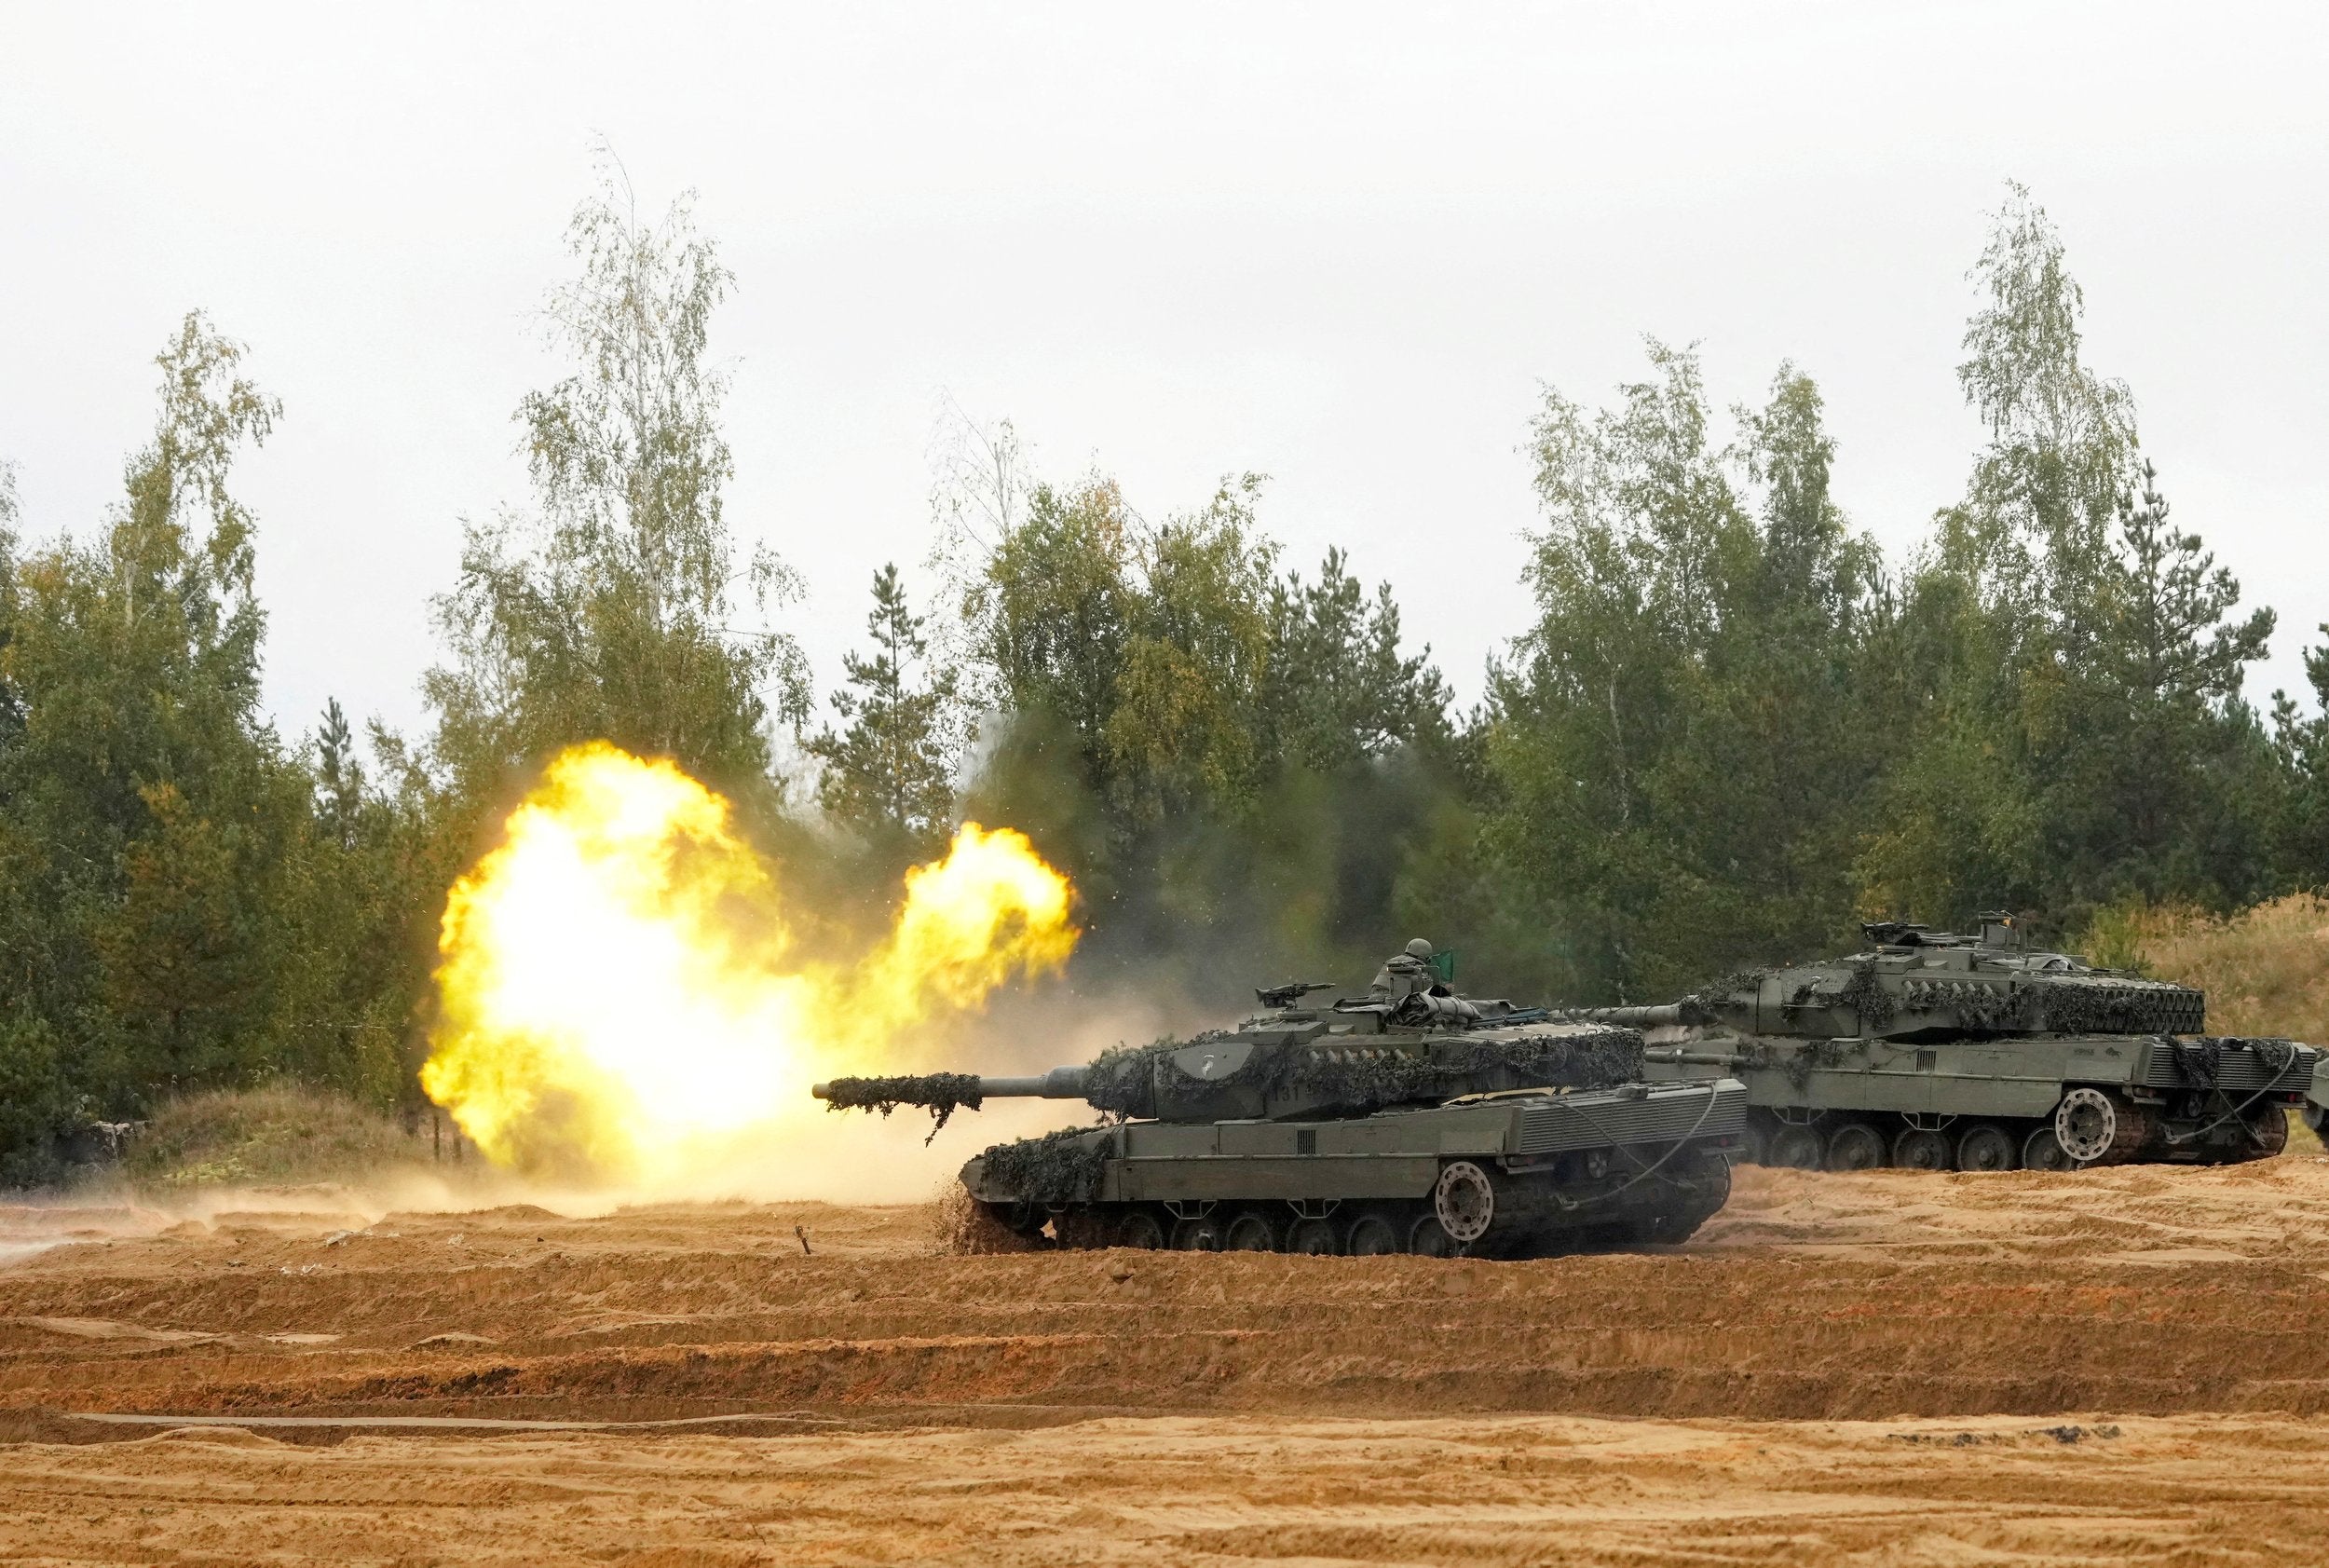 Poland ready to send Ukraine tanks even if Germany opposes it, deputy FM says